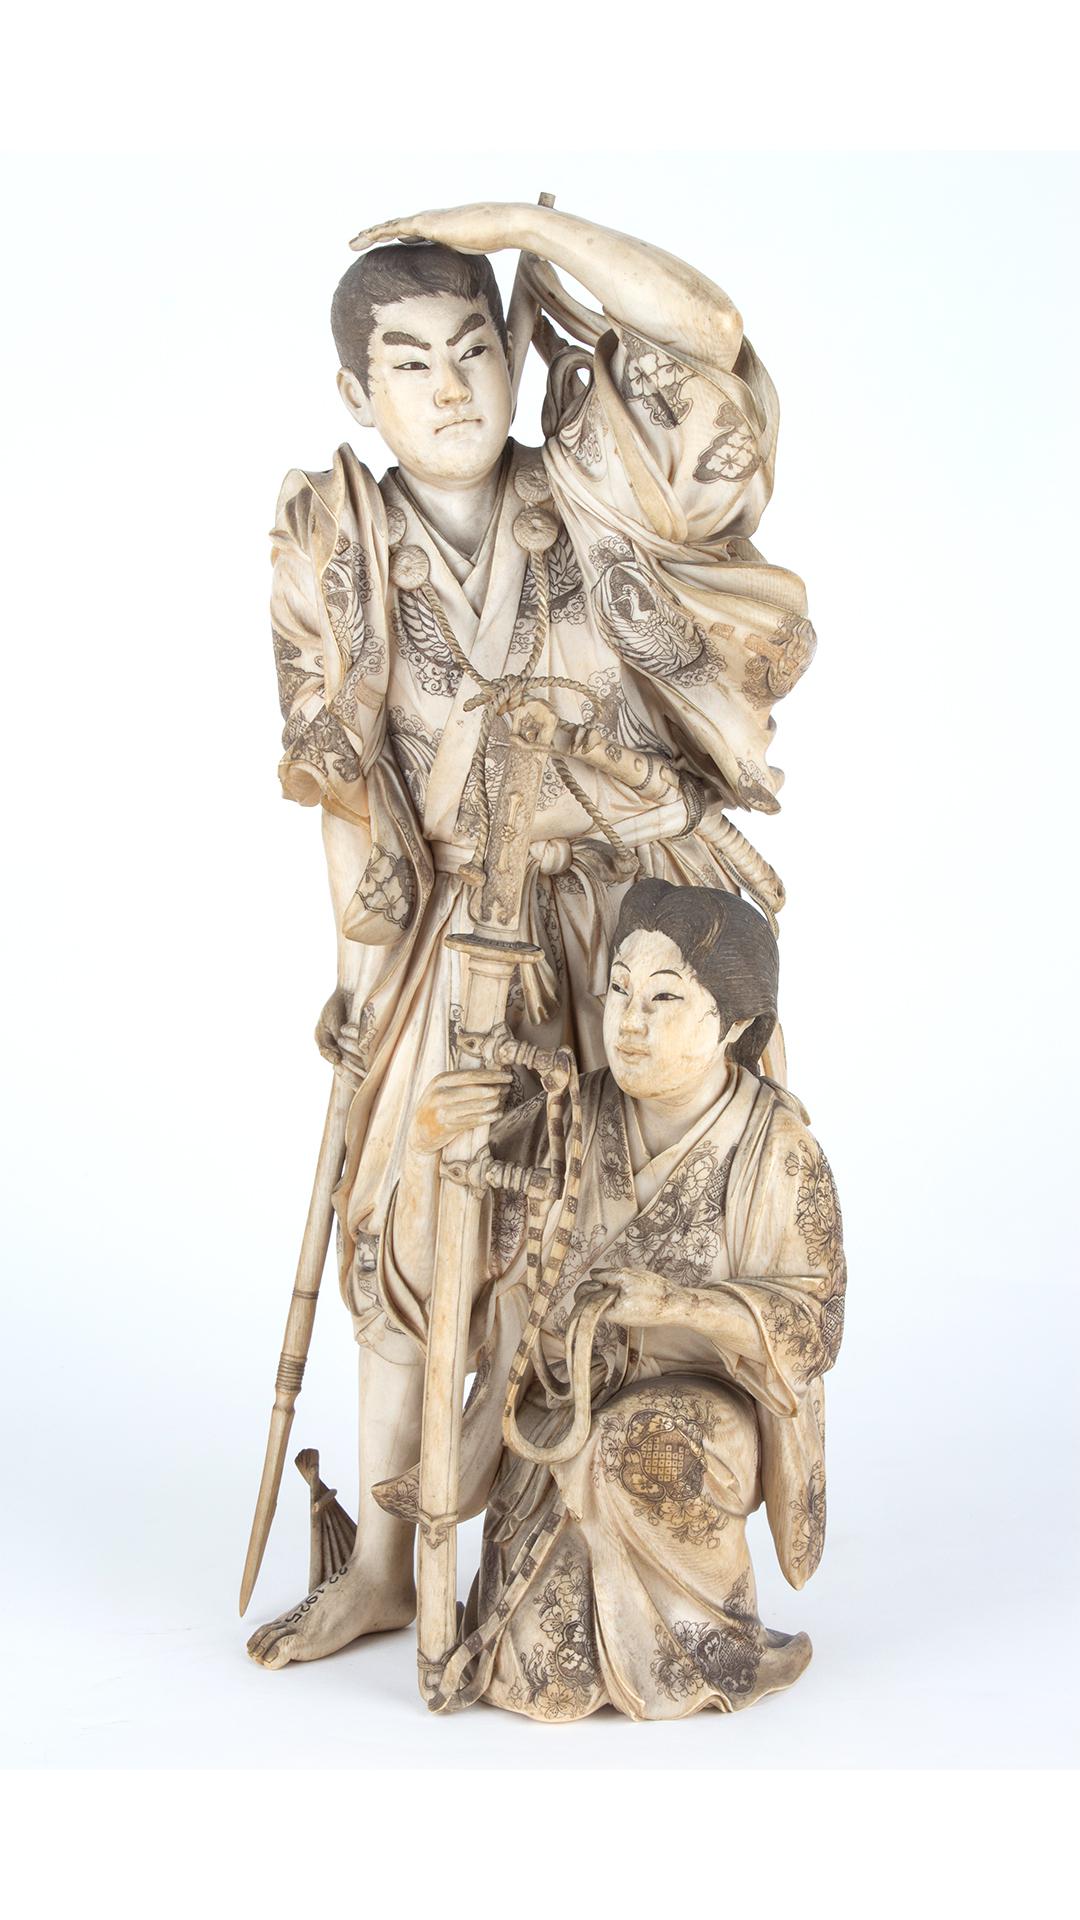 Samurai and his wife, ivory, Japanese,Meiji period,19 century, sir ratan tata Art collection,csmvs museum Mumbai India.jpg